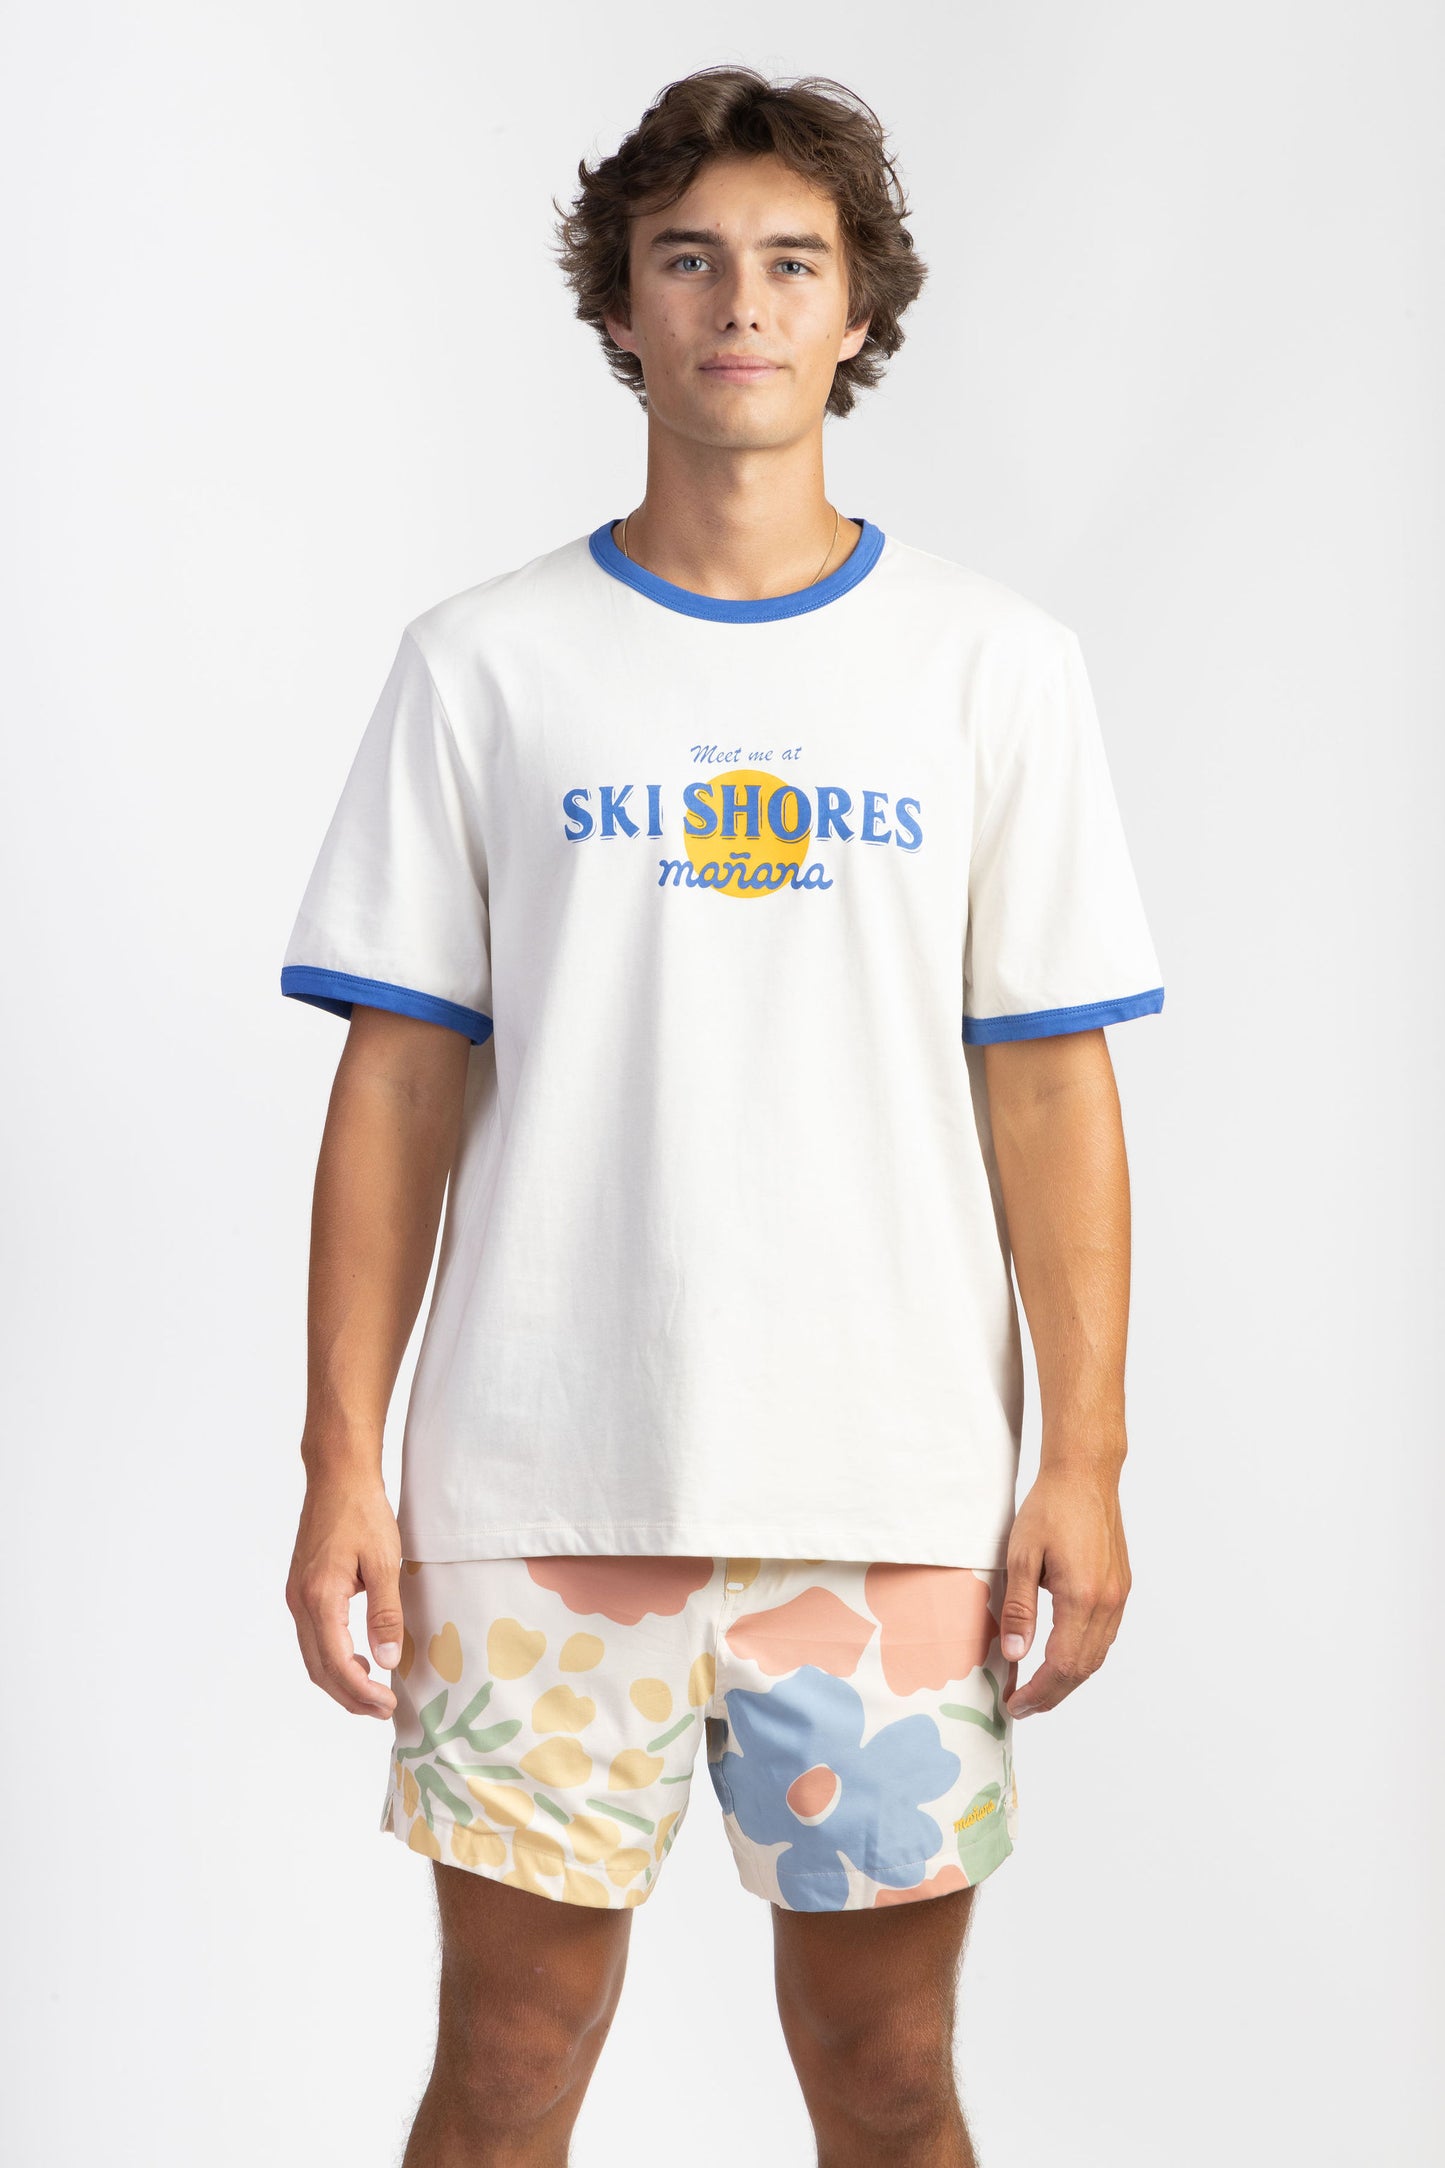 A man wearing a Ski Shores Blue Ringer Shirt having Manana branding with floral shorts